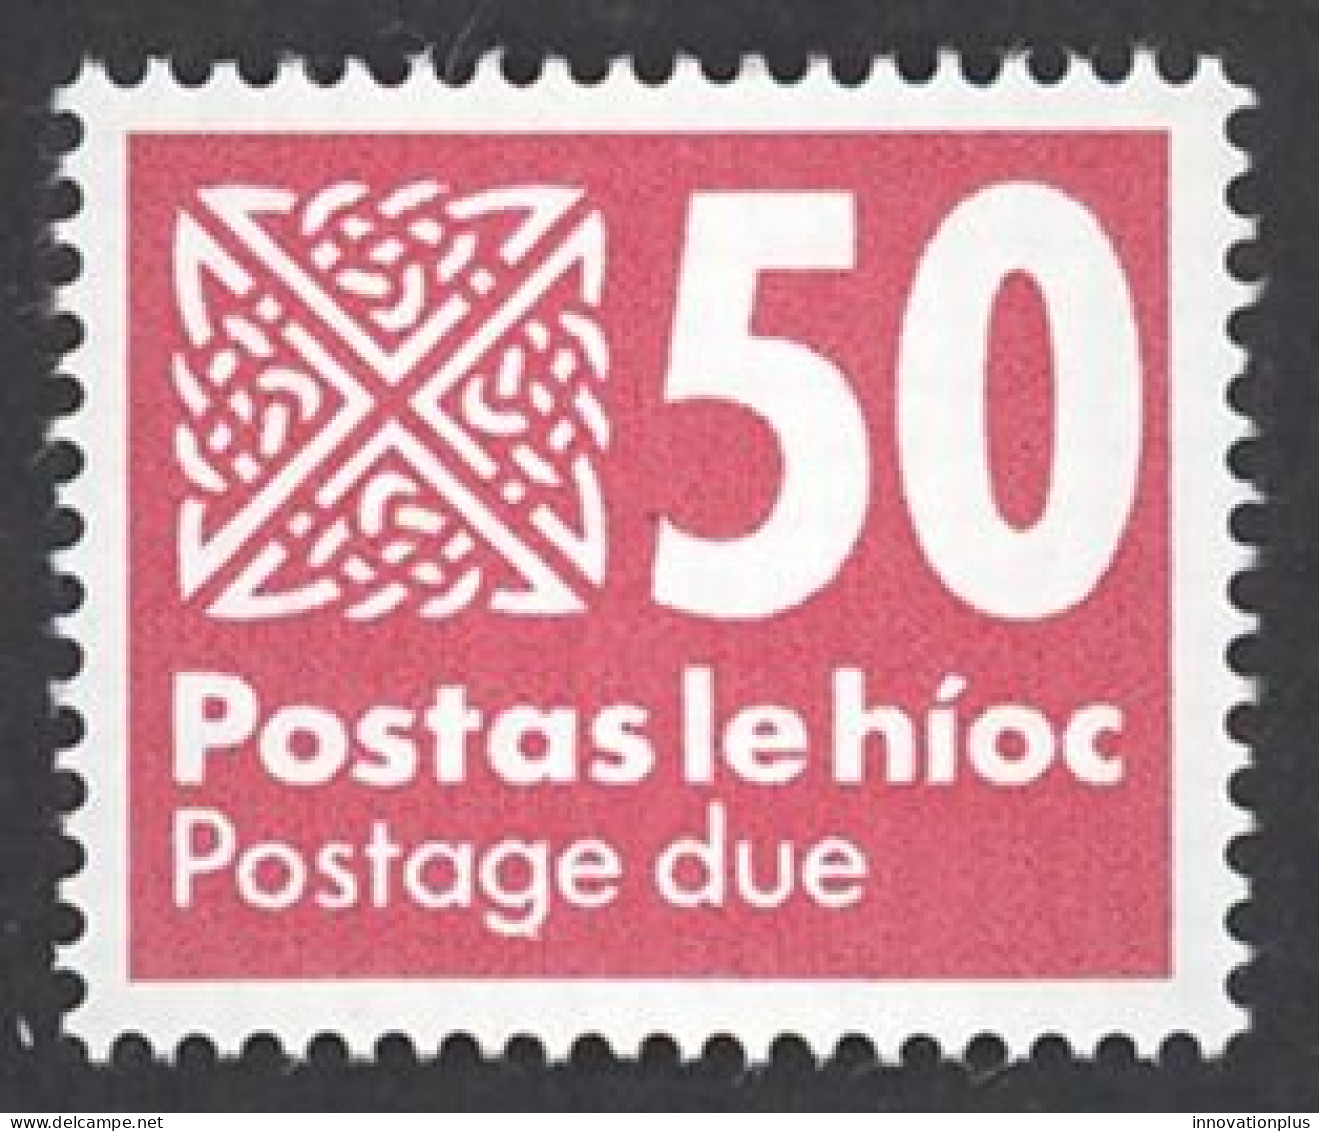 Ireland Sc# J36 MNH 1985 50p Postage Due - Strafport